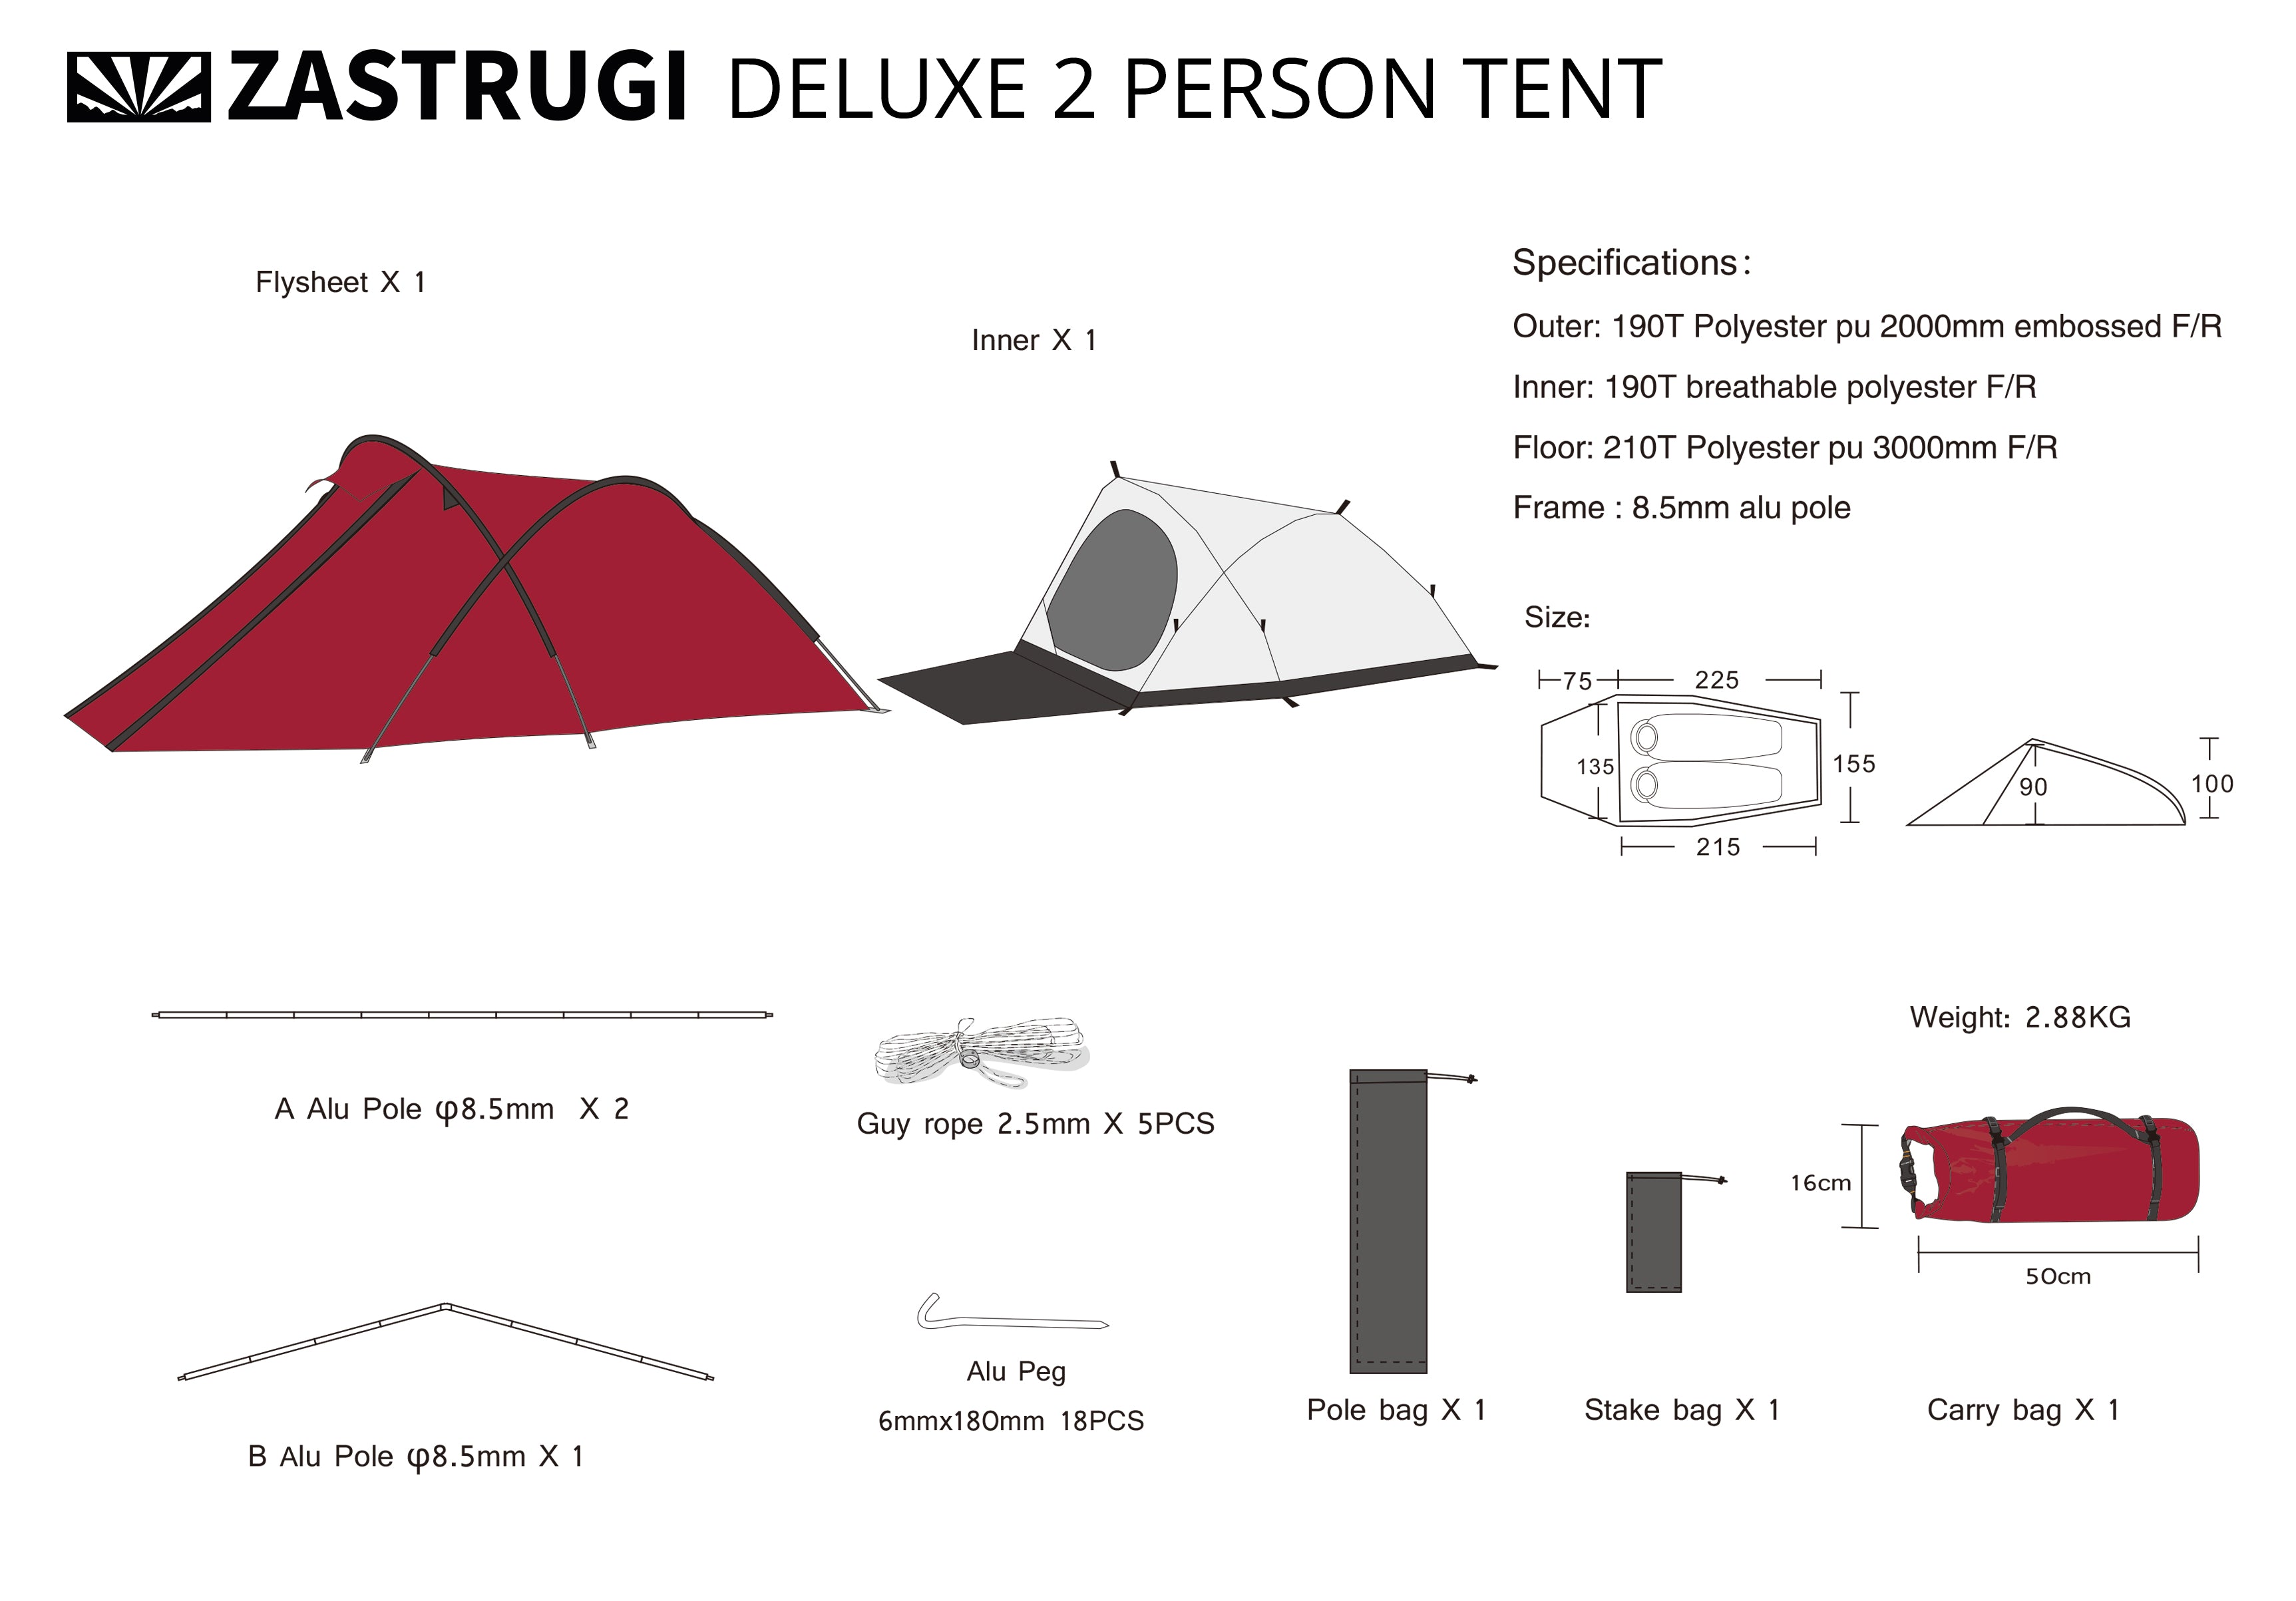 Zastrugi Deluxe 2 Person Tent